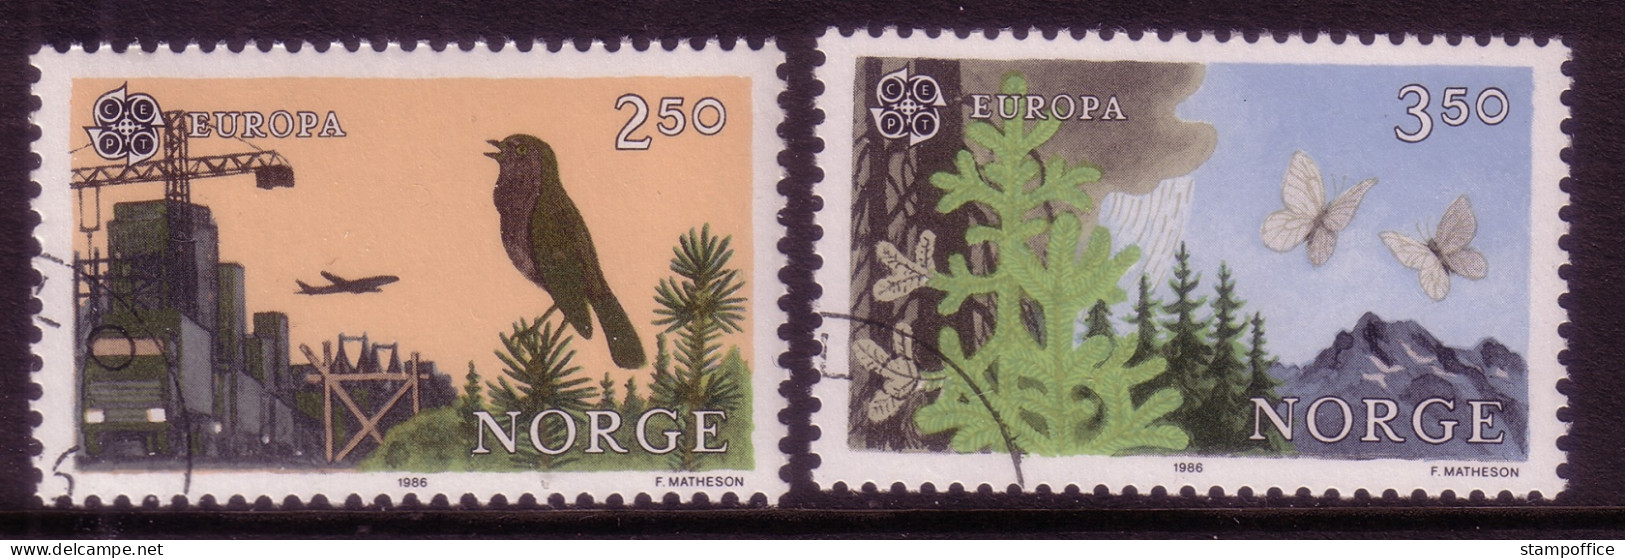 NORWEGEN MI-NR. 946-947 GESTEMPELT EUROPA 1986 UMWELTSCHUTZ VOGEL SCHMETTERLING - Used Stamps